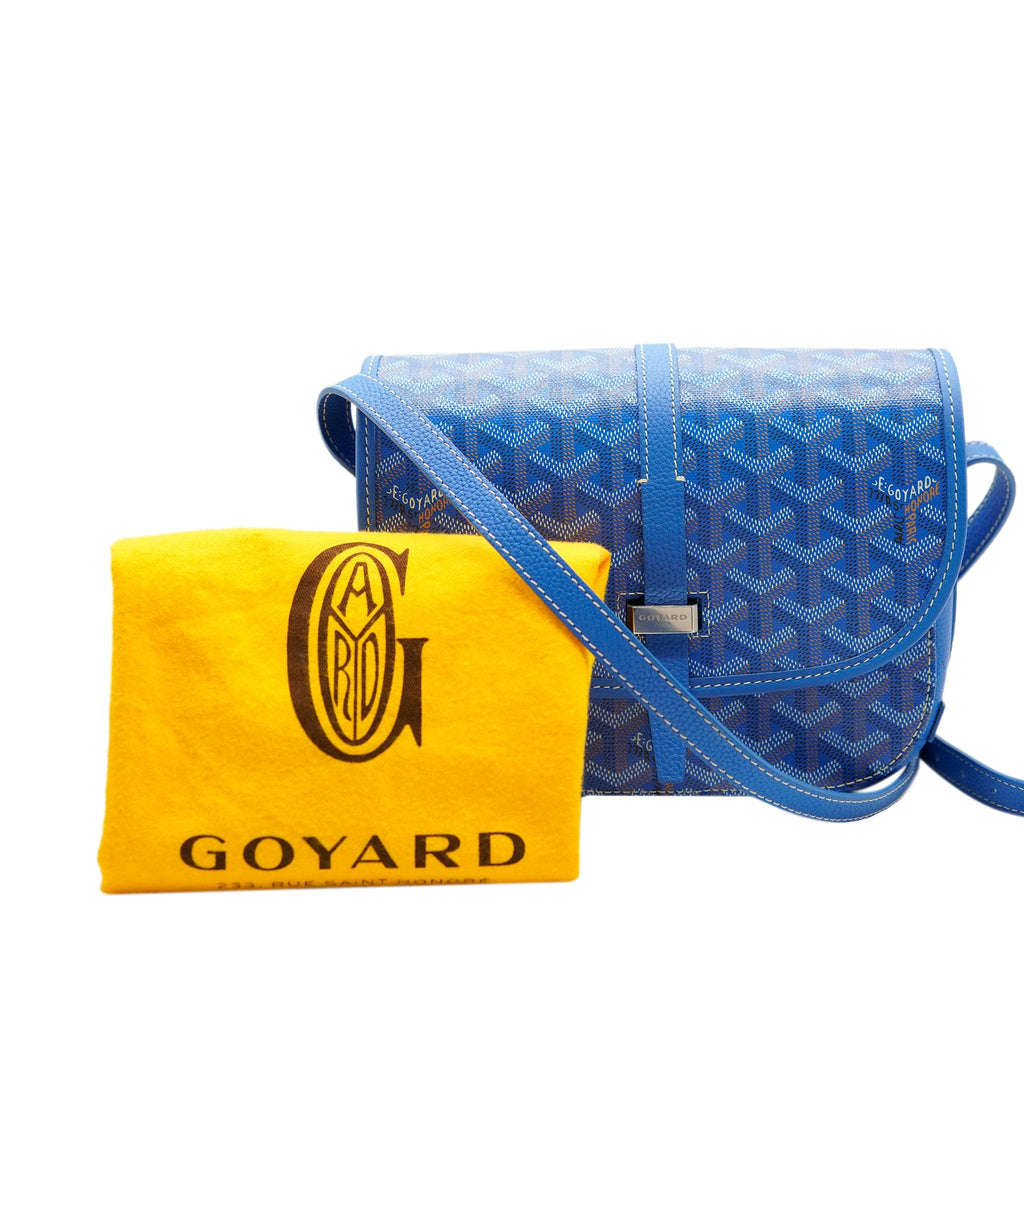 Goyard Belvedere Bag